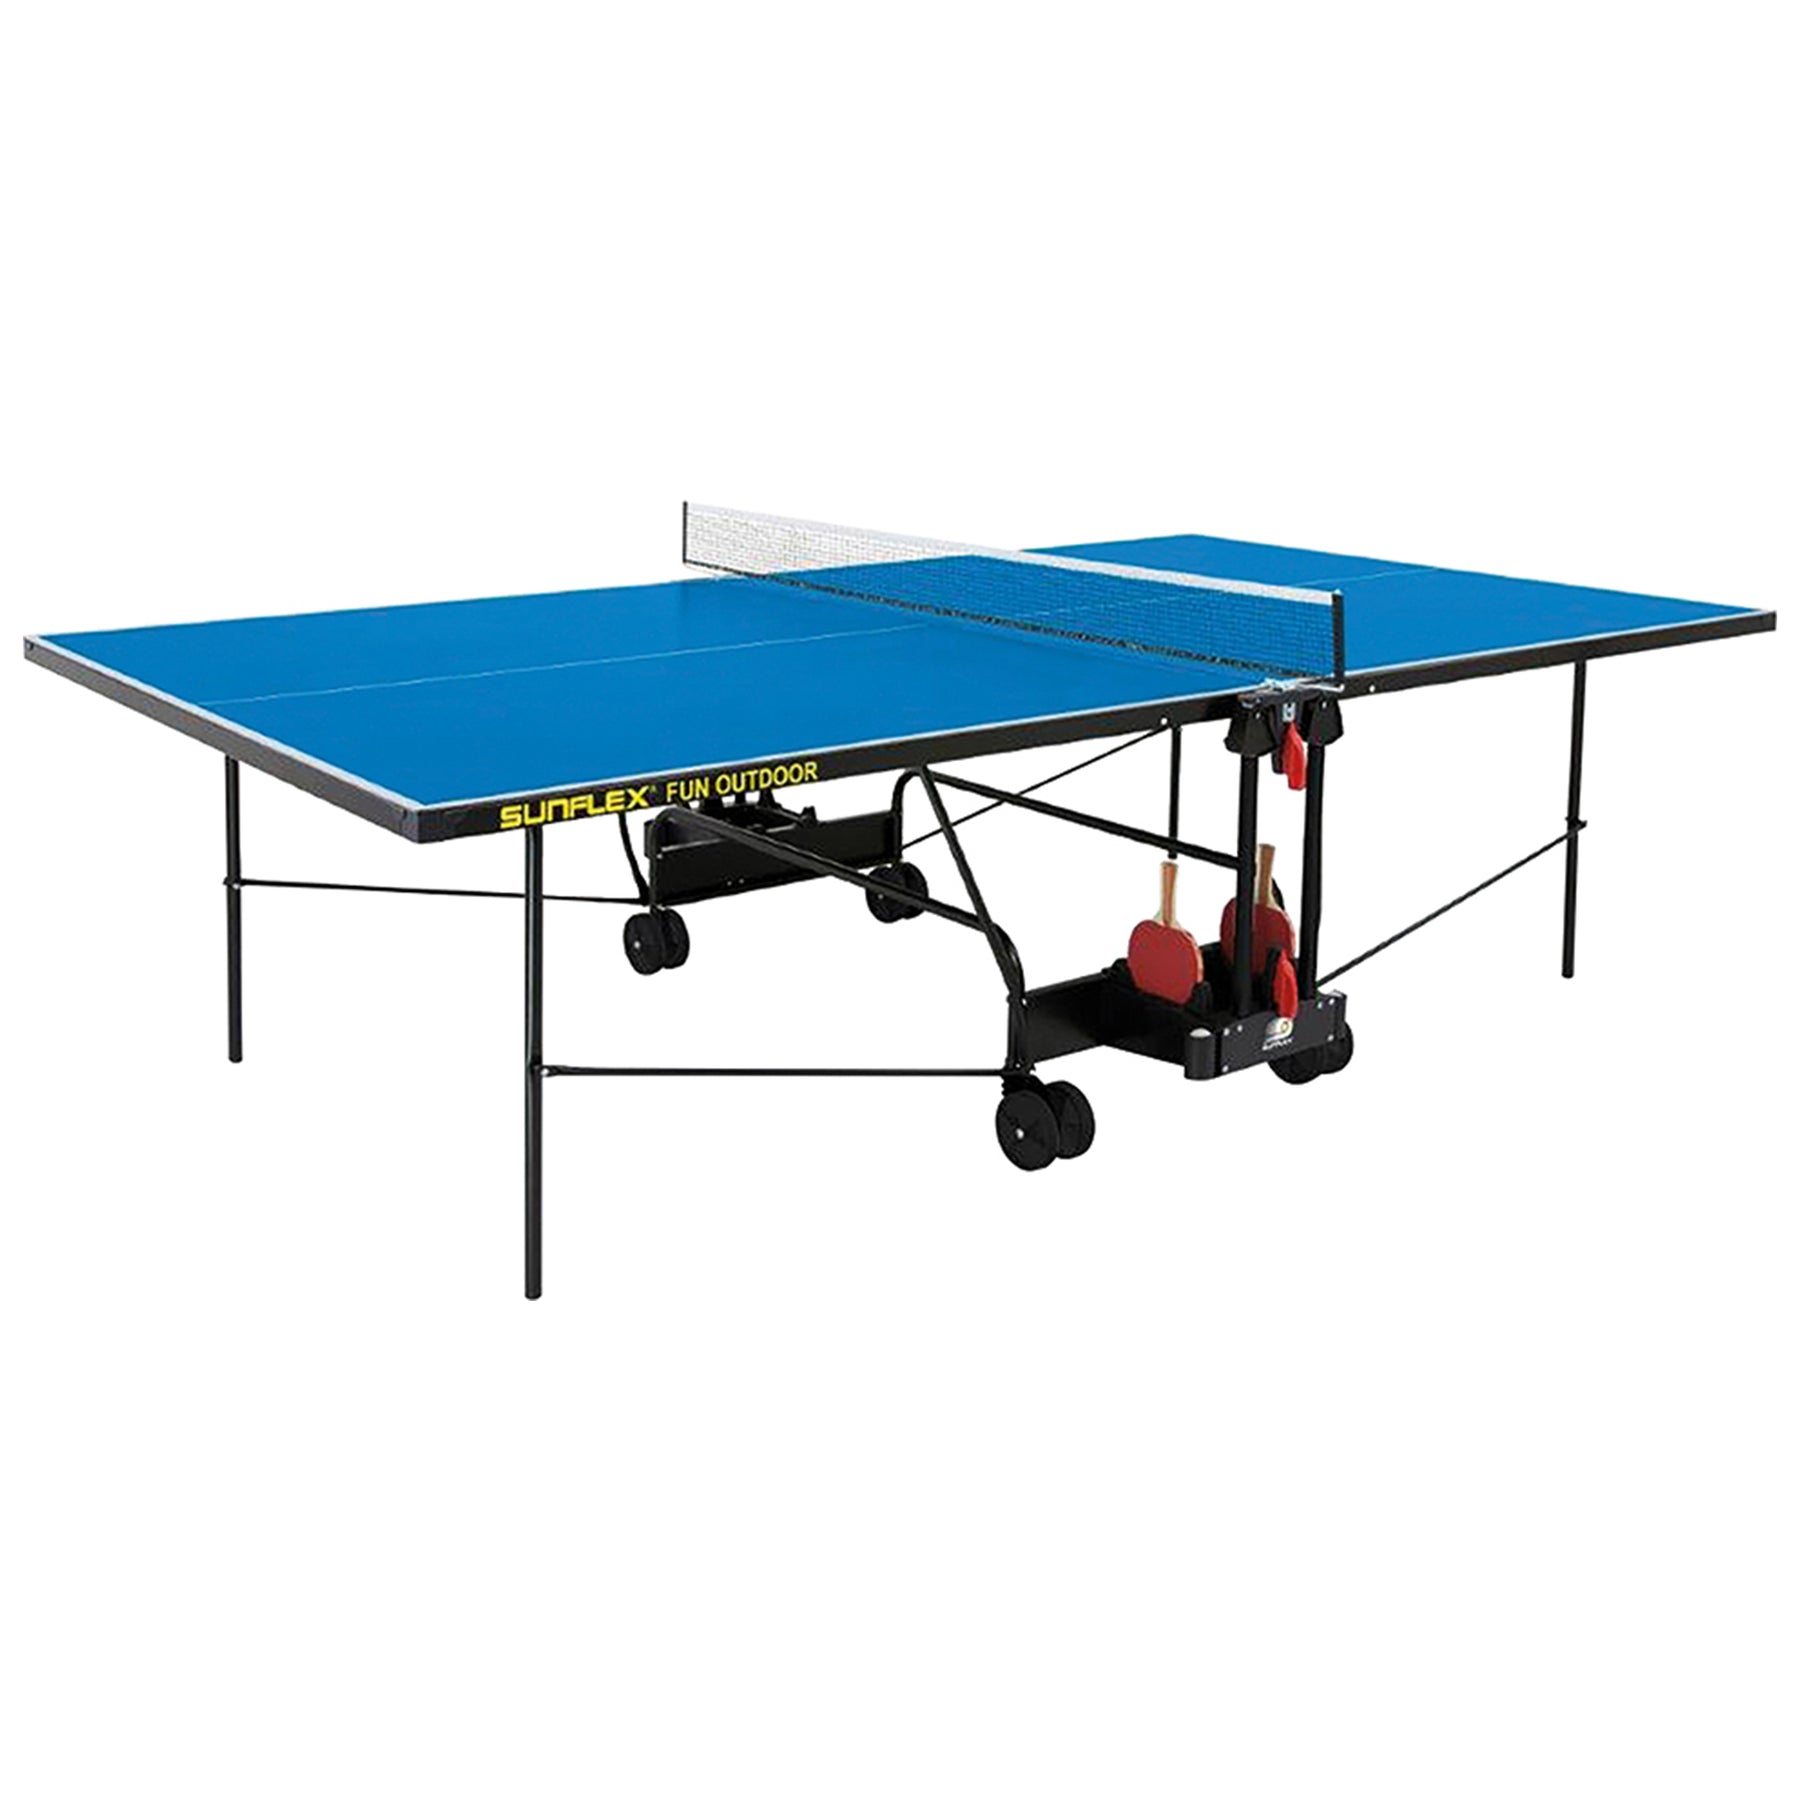 Sunflex Fun Outdoor Table Tennis Table: Blue